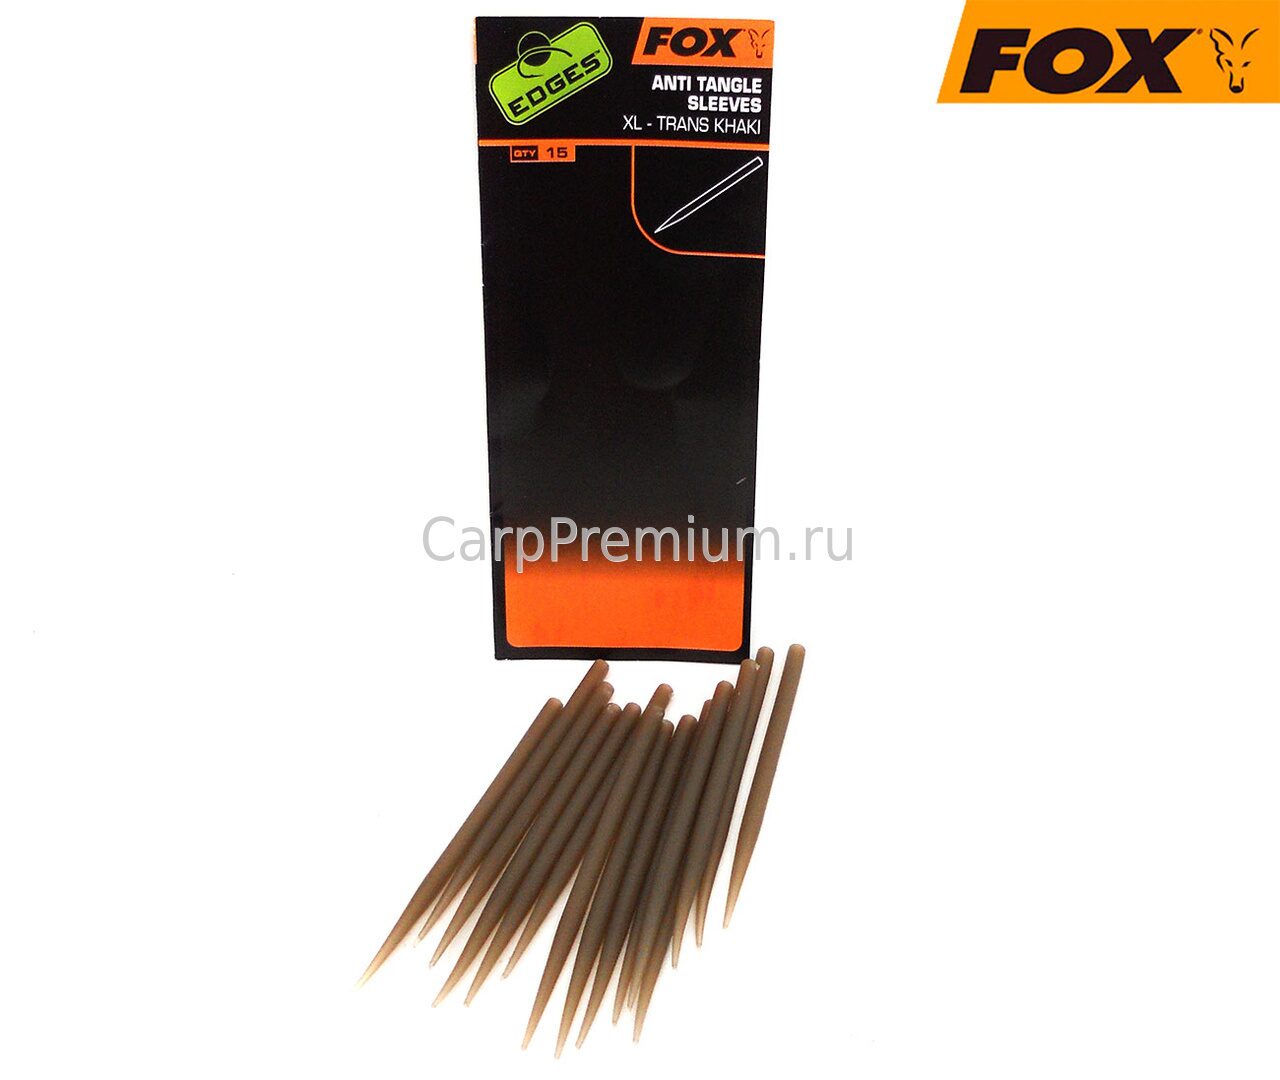 Отводчик удлиненный Fox (Фокс) - EDGES Anti Tangle Sleeves XL, 15 шт